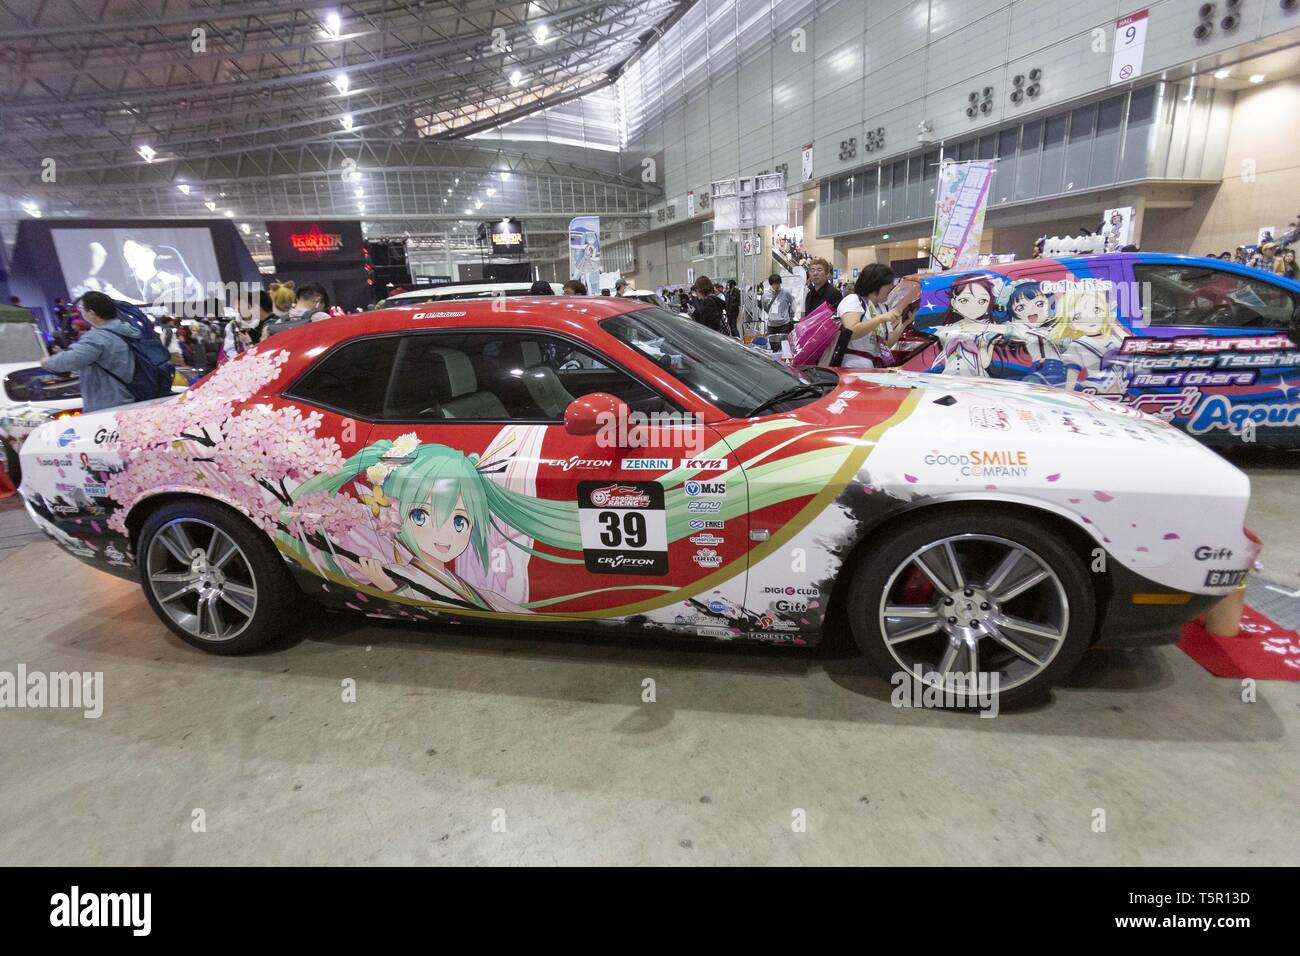 Itasha the cringeworthy cartoon cars of Japan are making an image Uturn